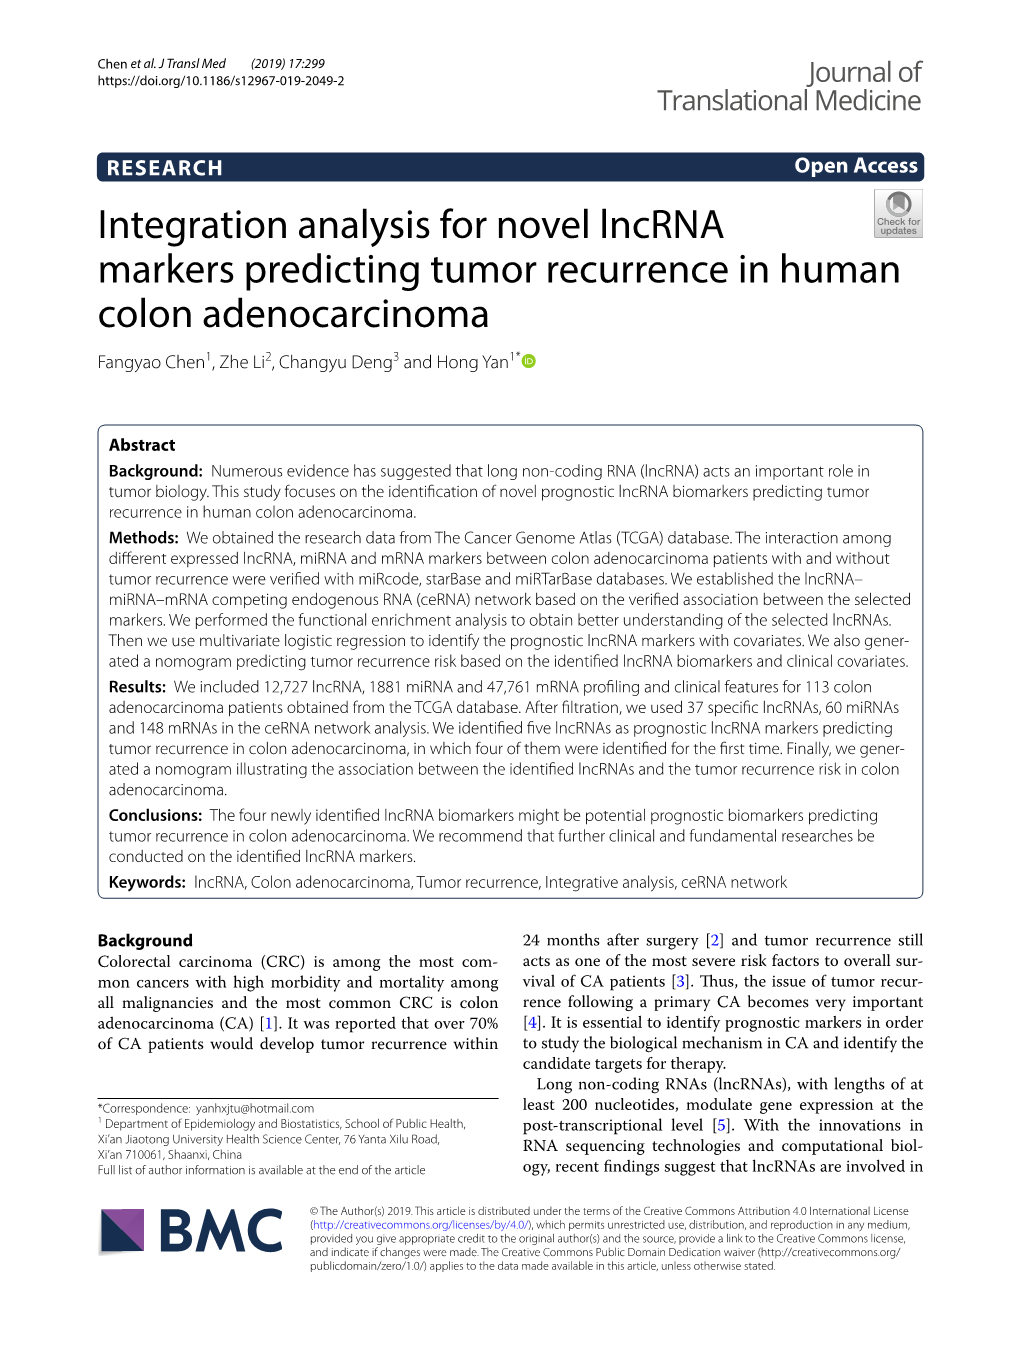 Integration Analysis for Novel Lncrna Markers Predicting Tumor Recurrence in Human Colon Adenocarcinoma Fangyao Chen1, Zhe Li2, Changyu Deng3 and Hong Yan1*